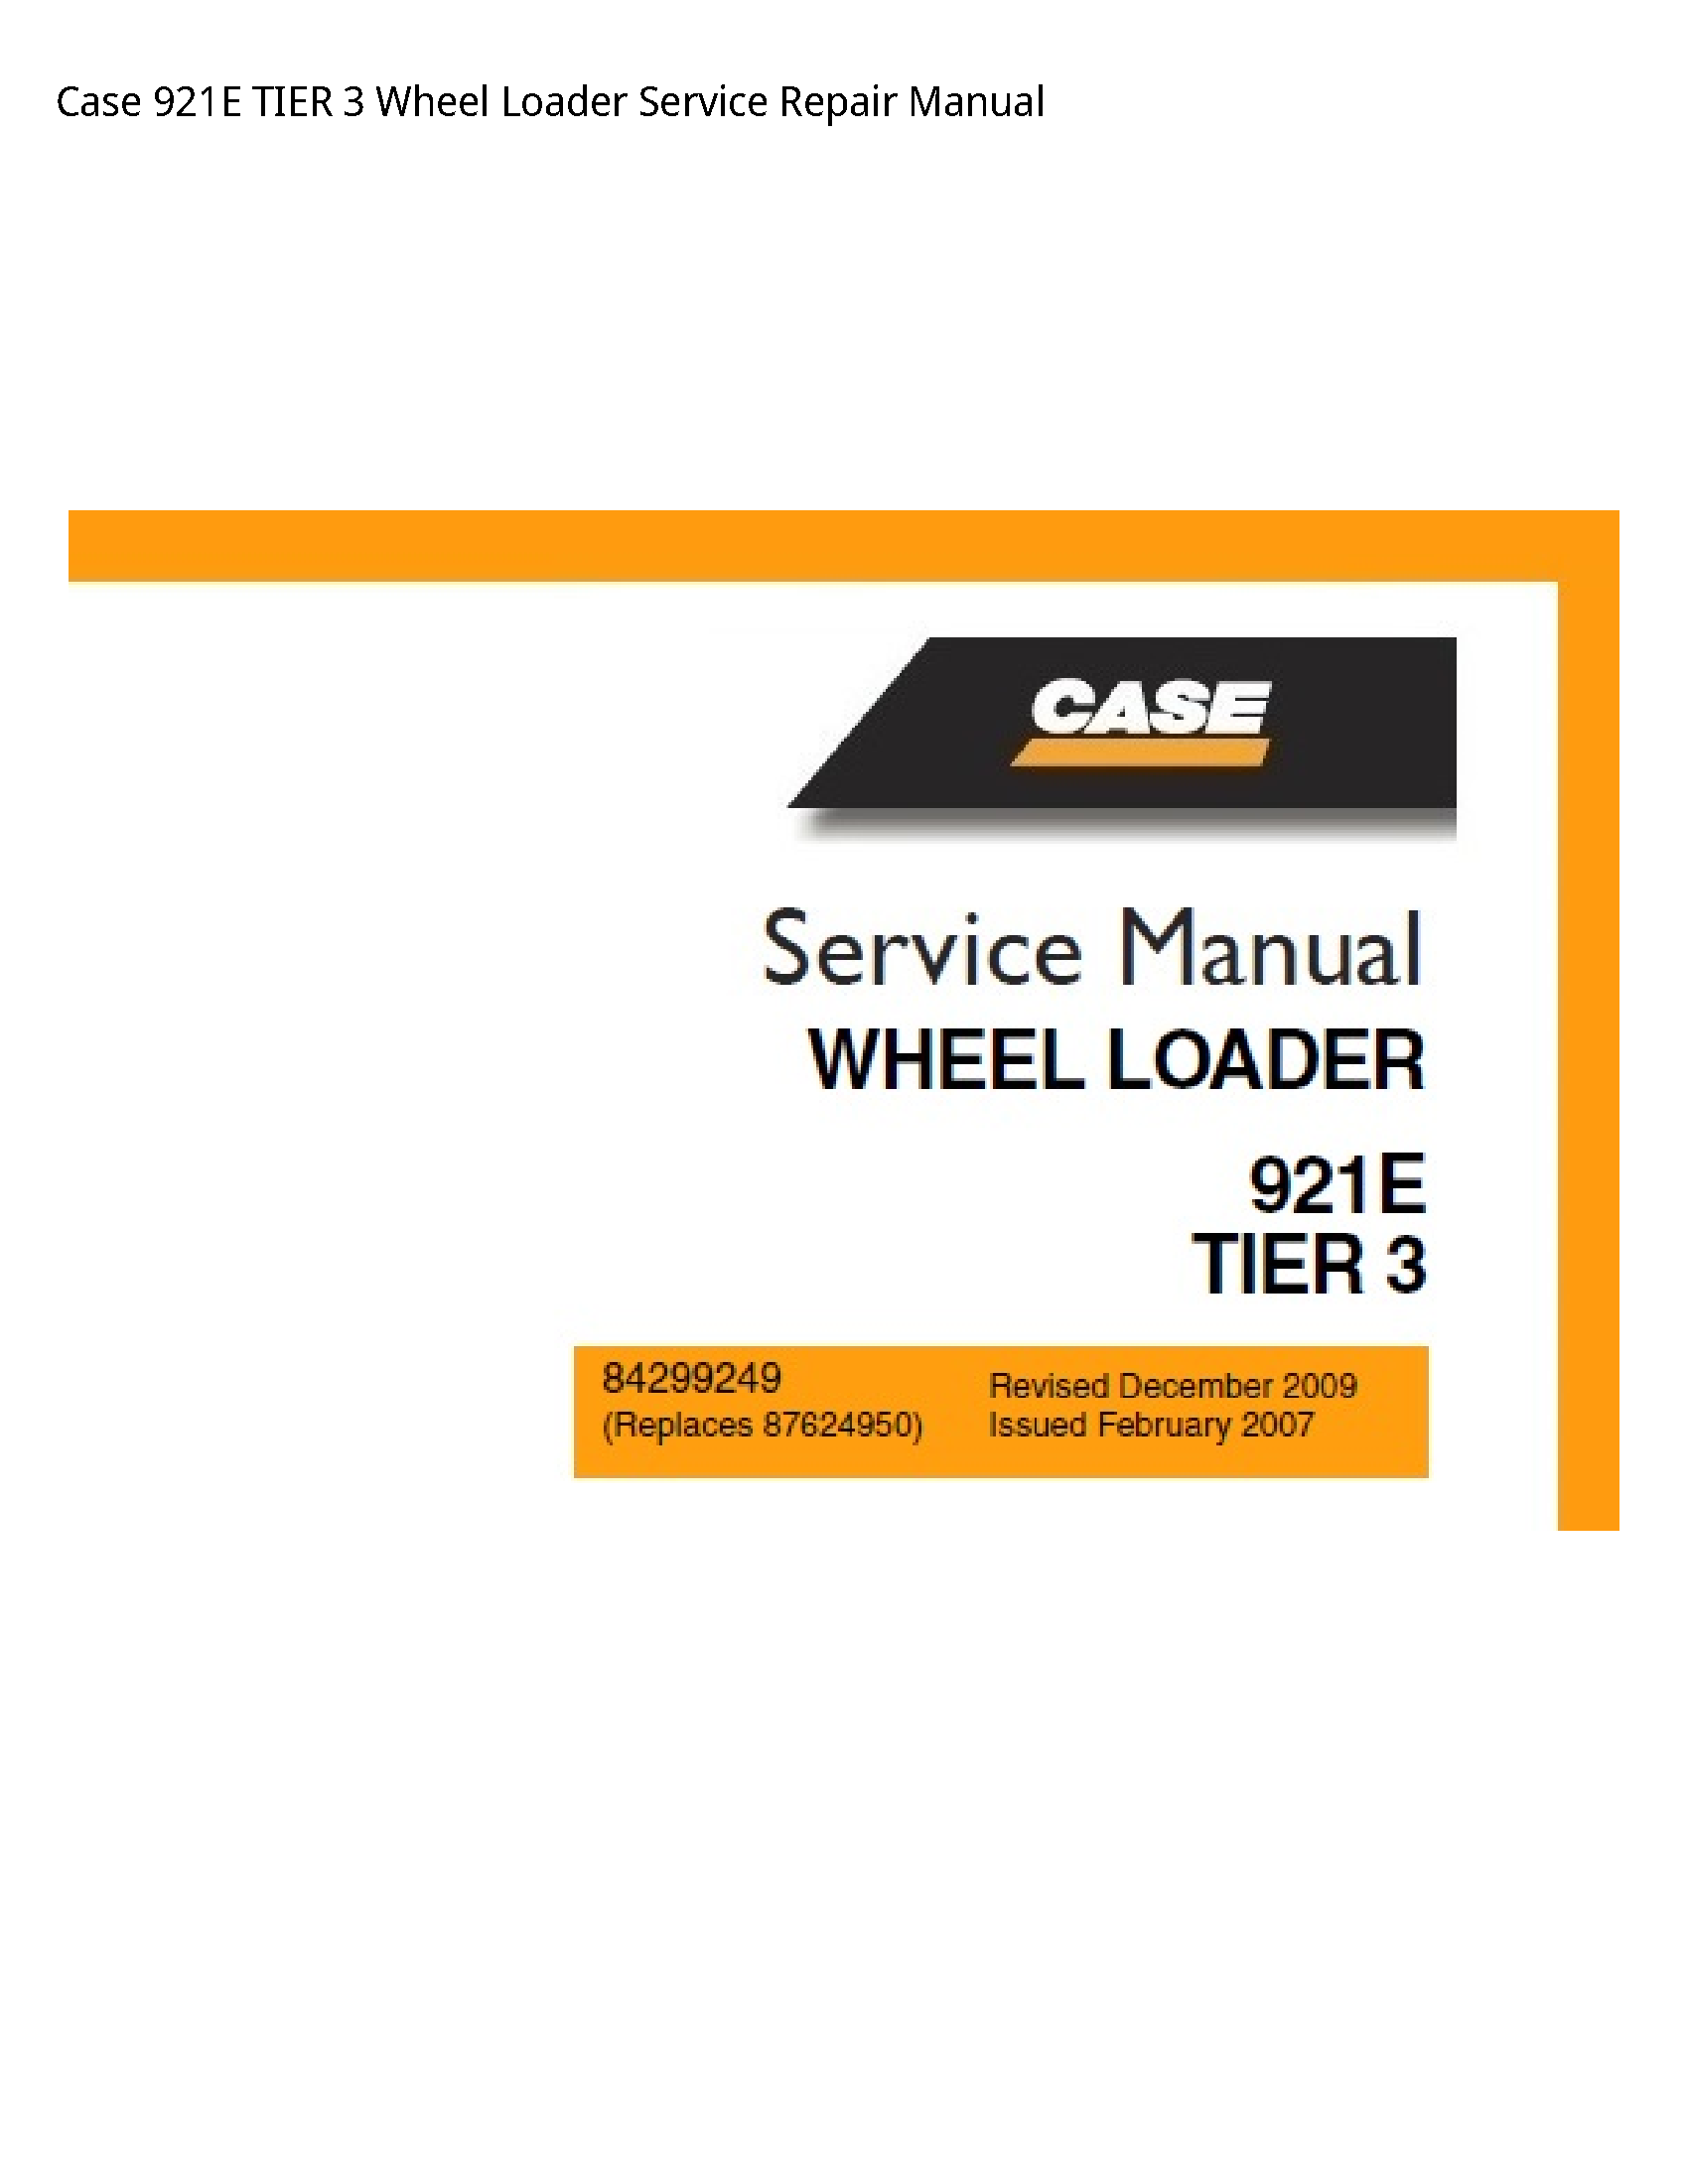 Case/Case IH 921E TIER Wheel Loader manual